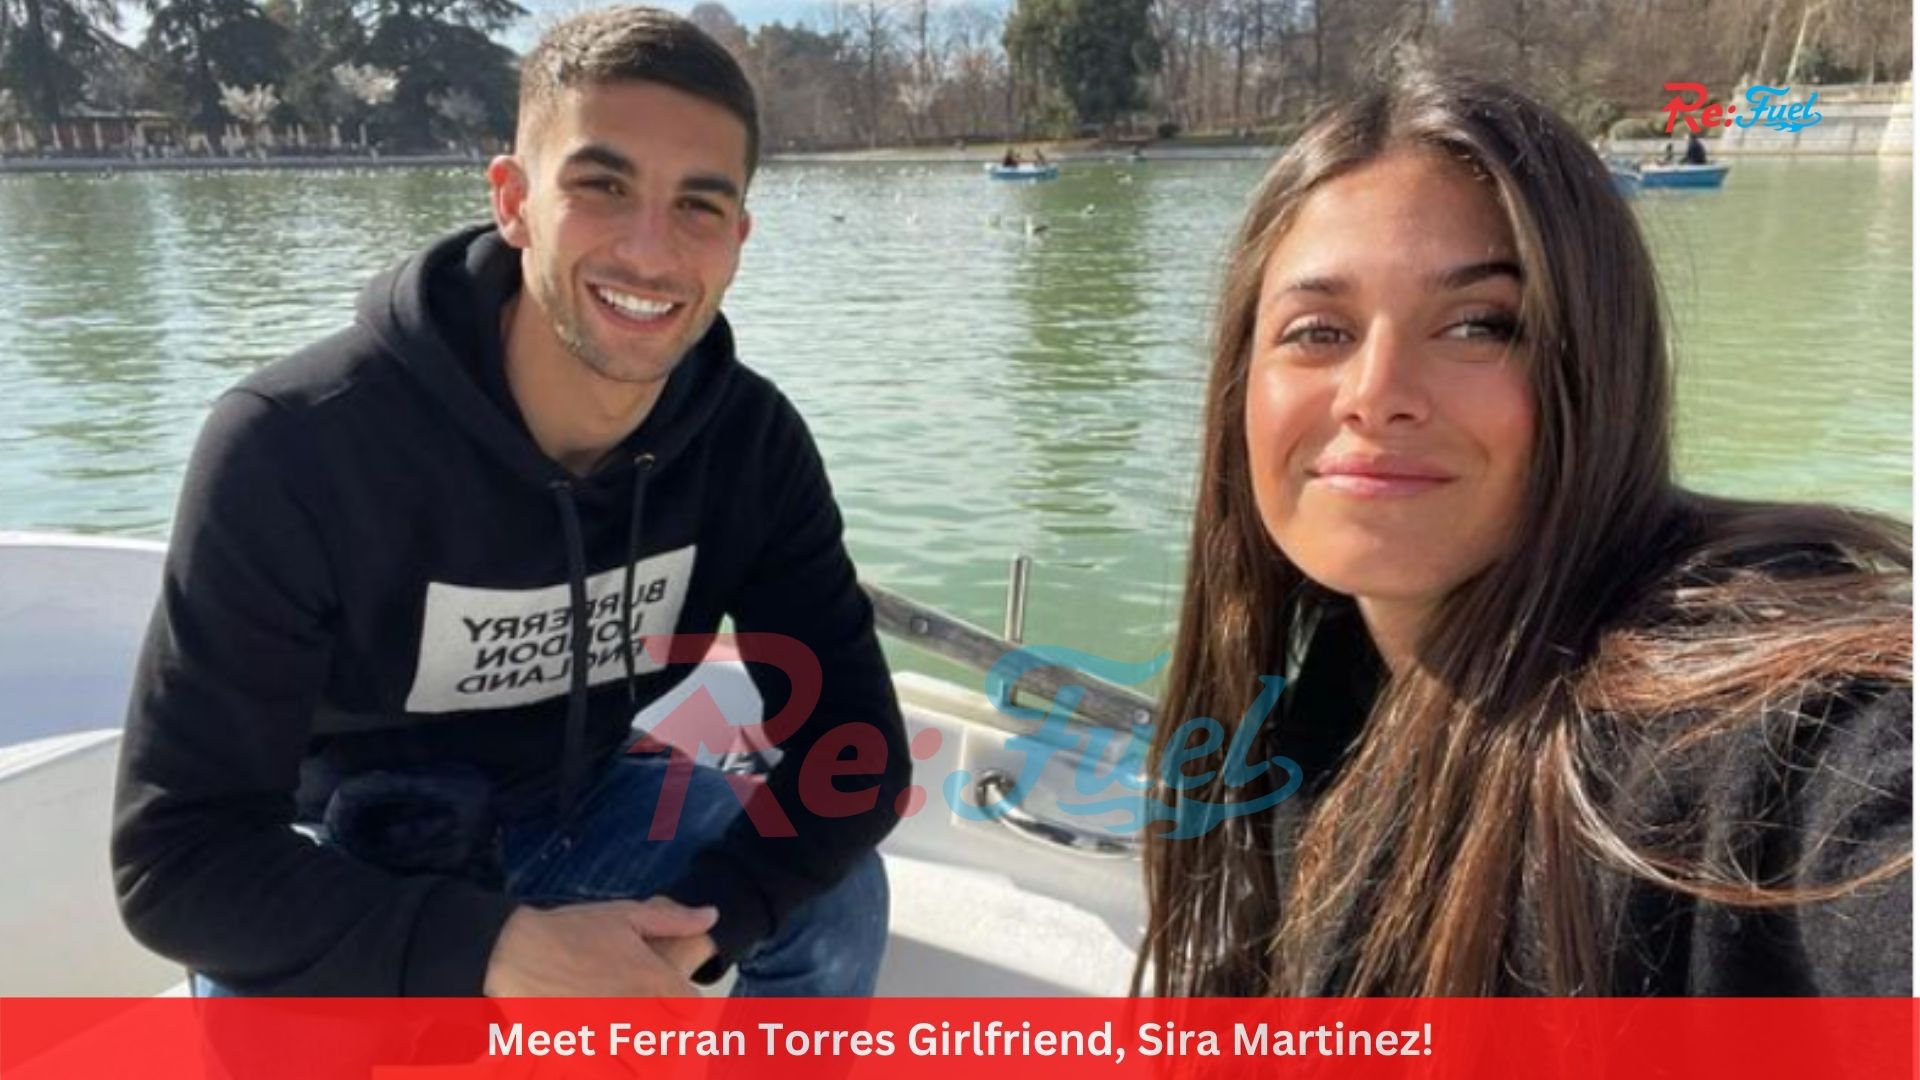 Meet Ferran Torres Girlfriend, Sira Martinez!